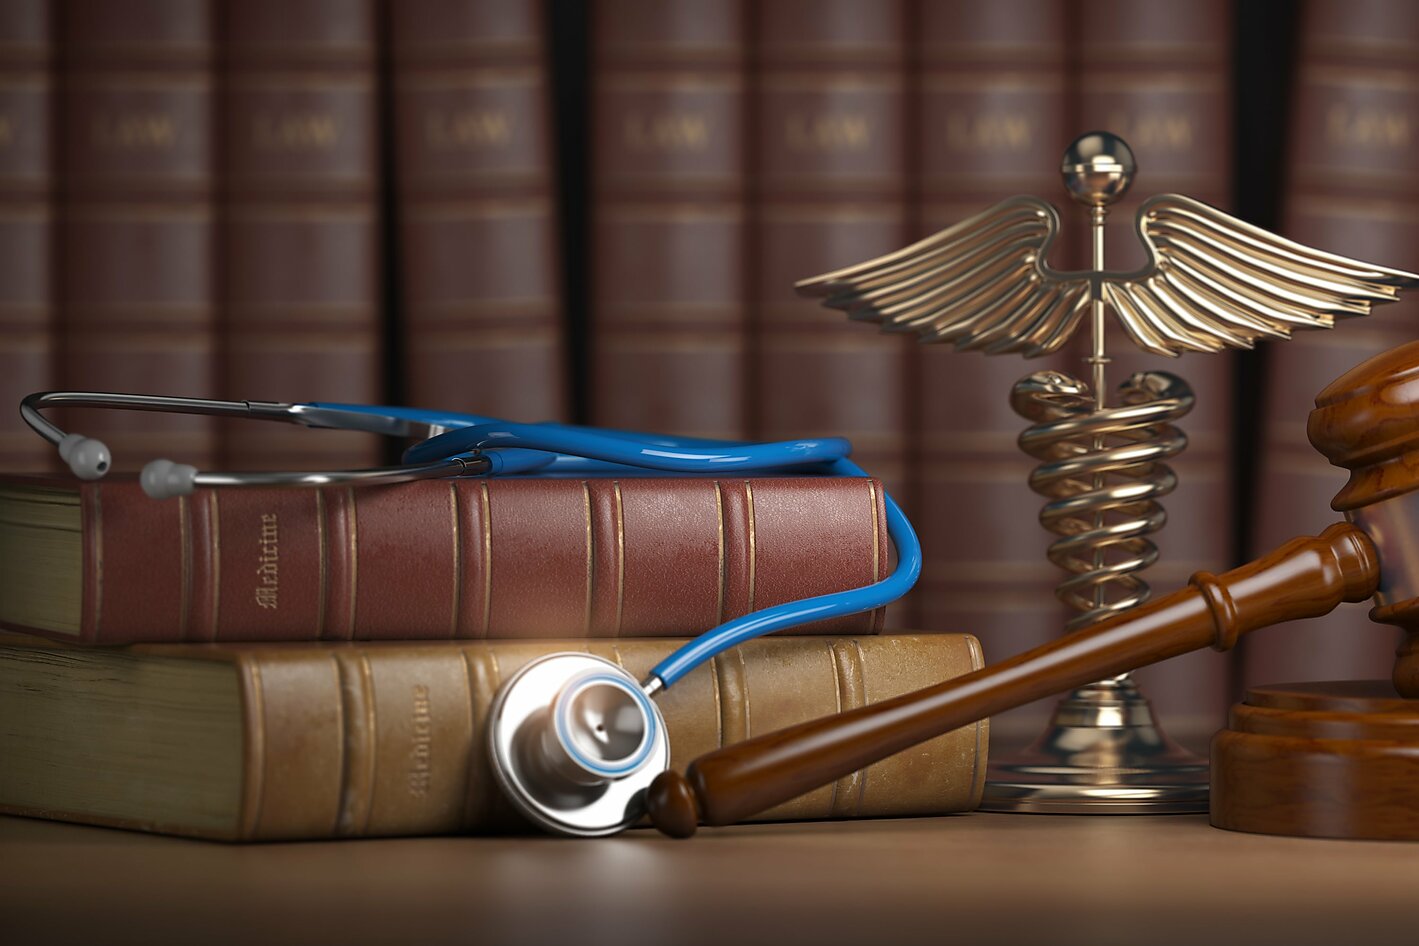 Reform Regulation of Health Care Providers